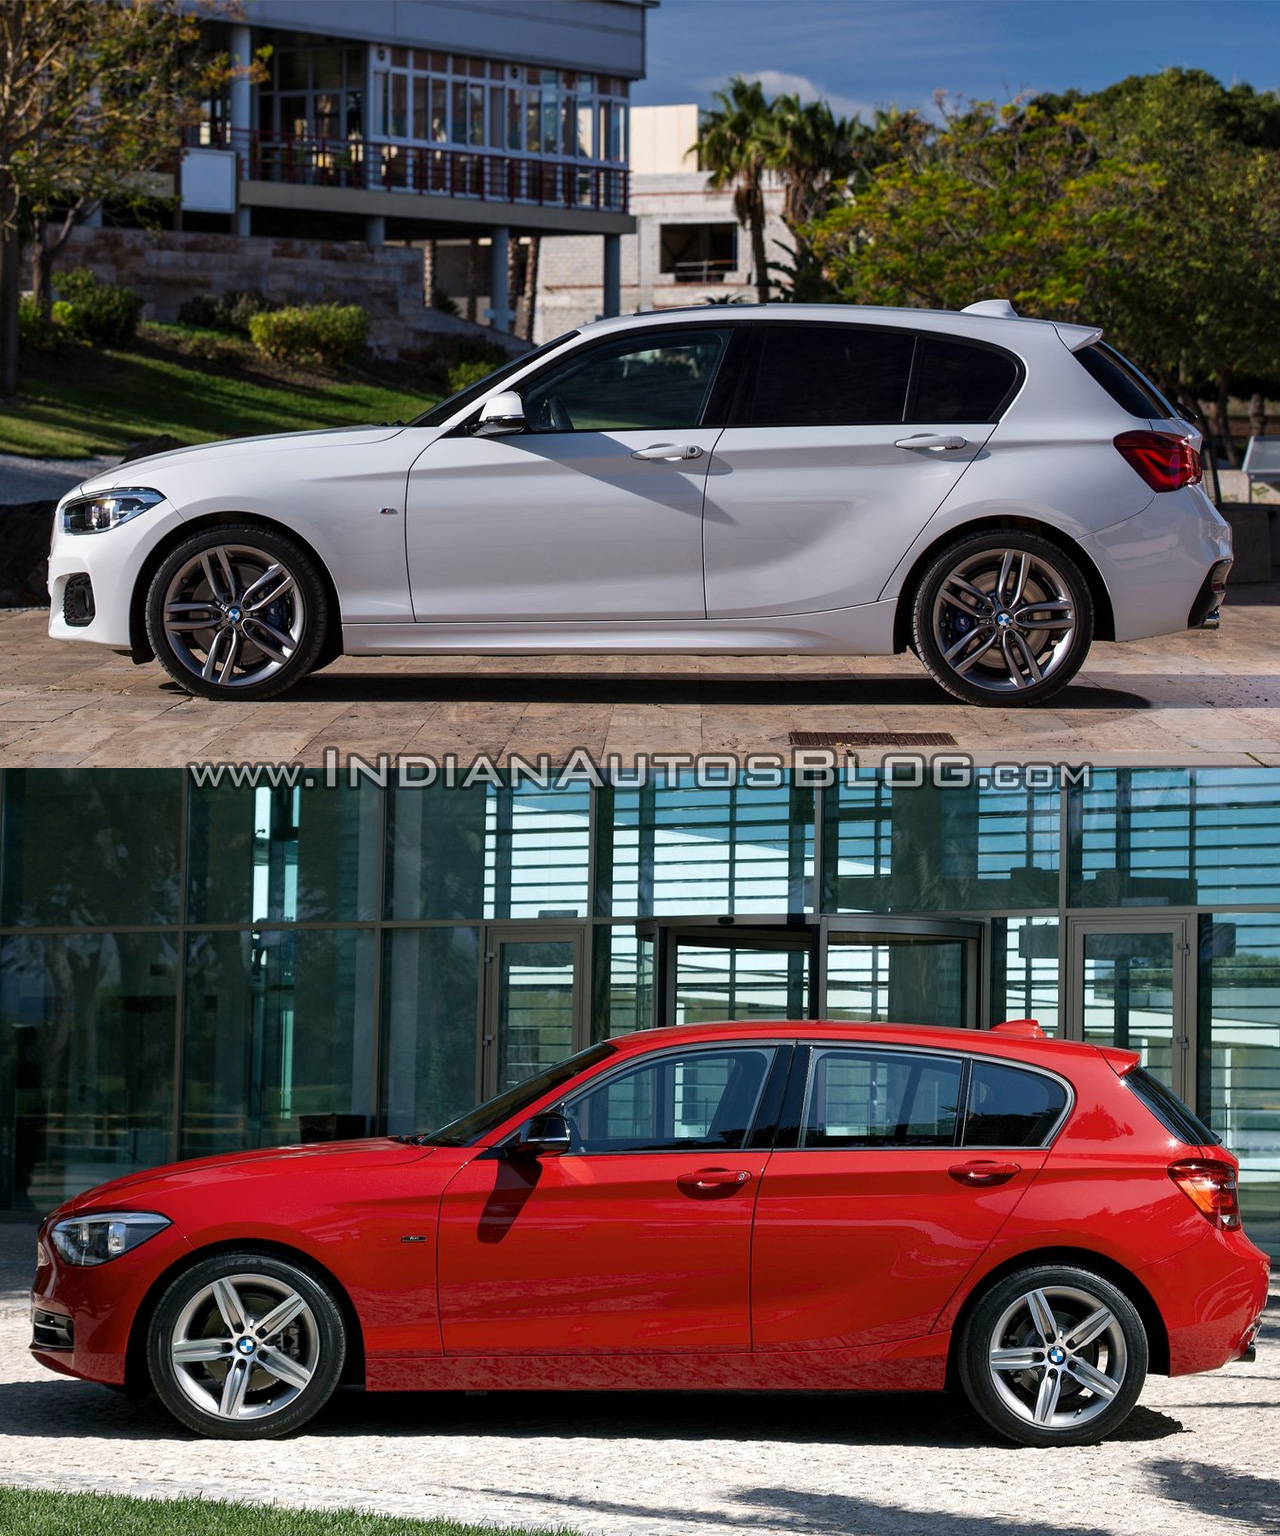 BMW Serie 1 (F20): diteci come va 